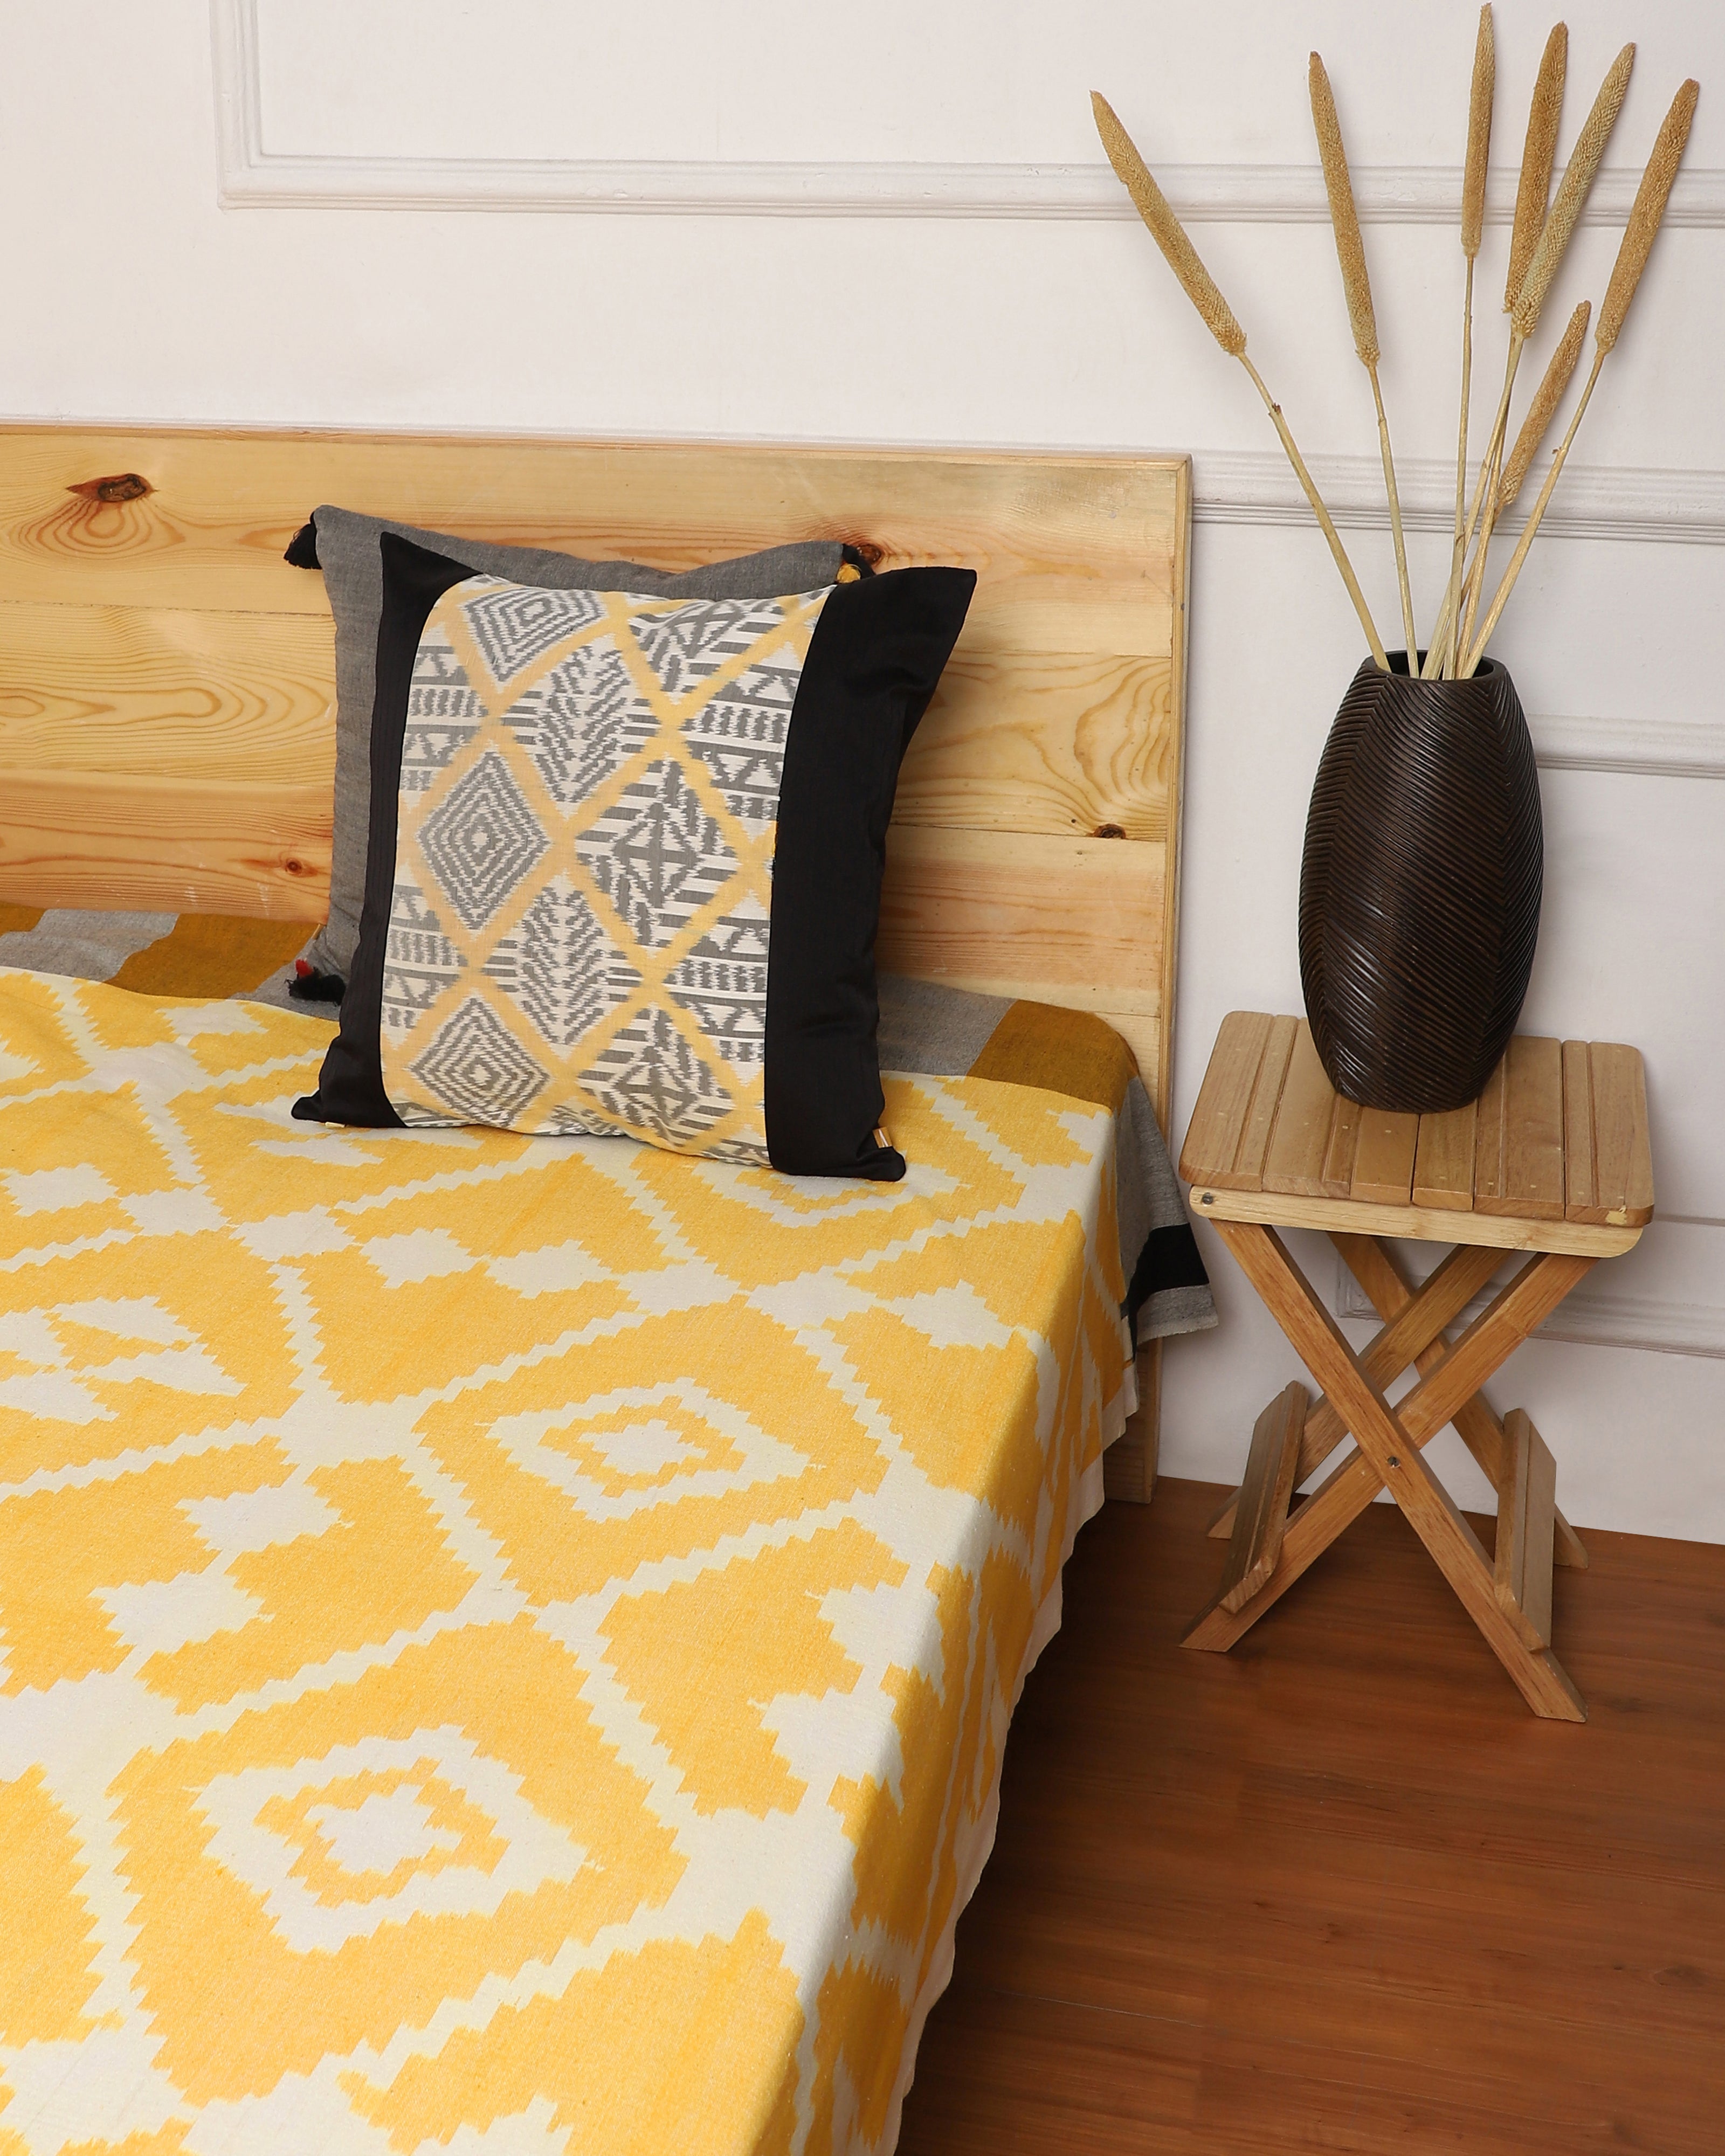 Shyla Warp Ikat Cotton Bed Cover - Medium Yellow